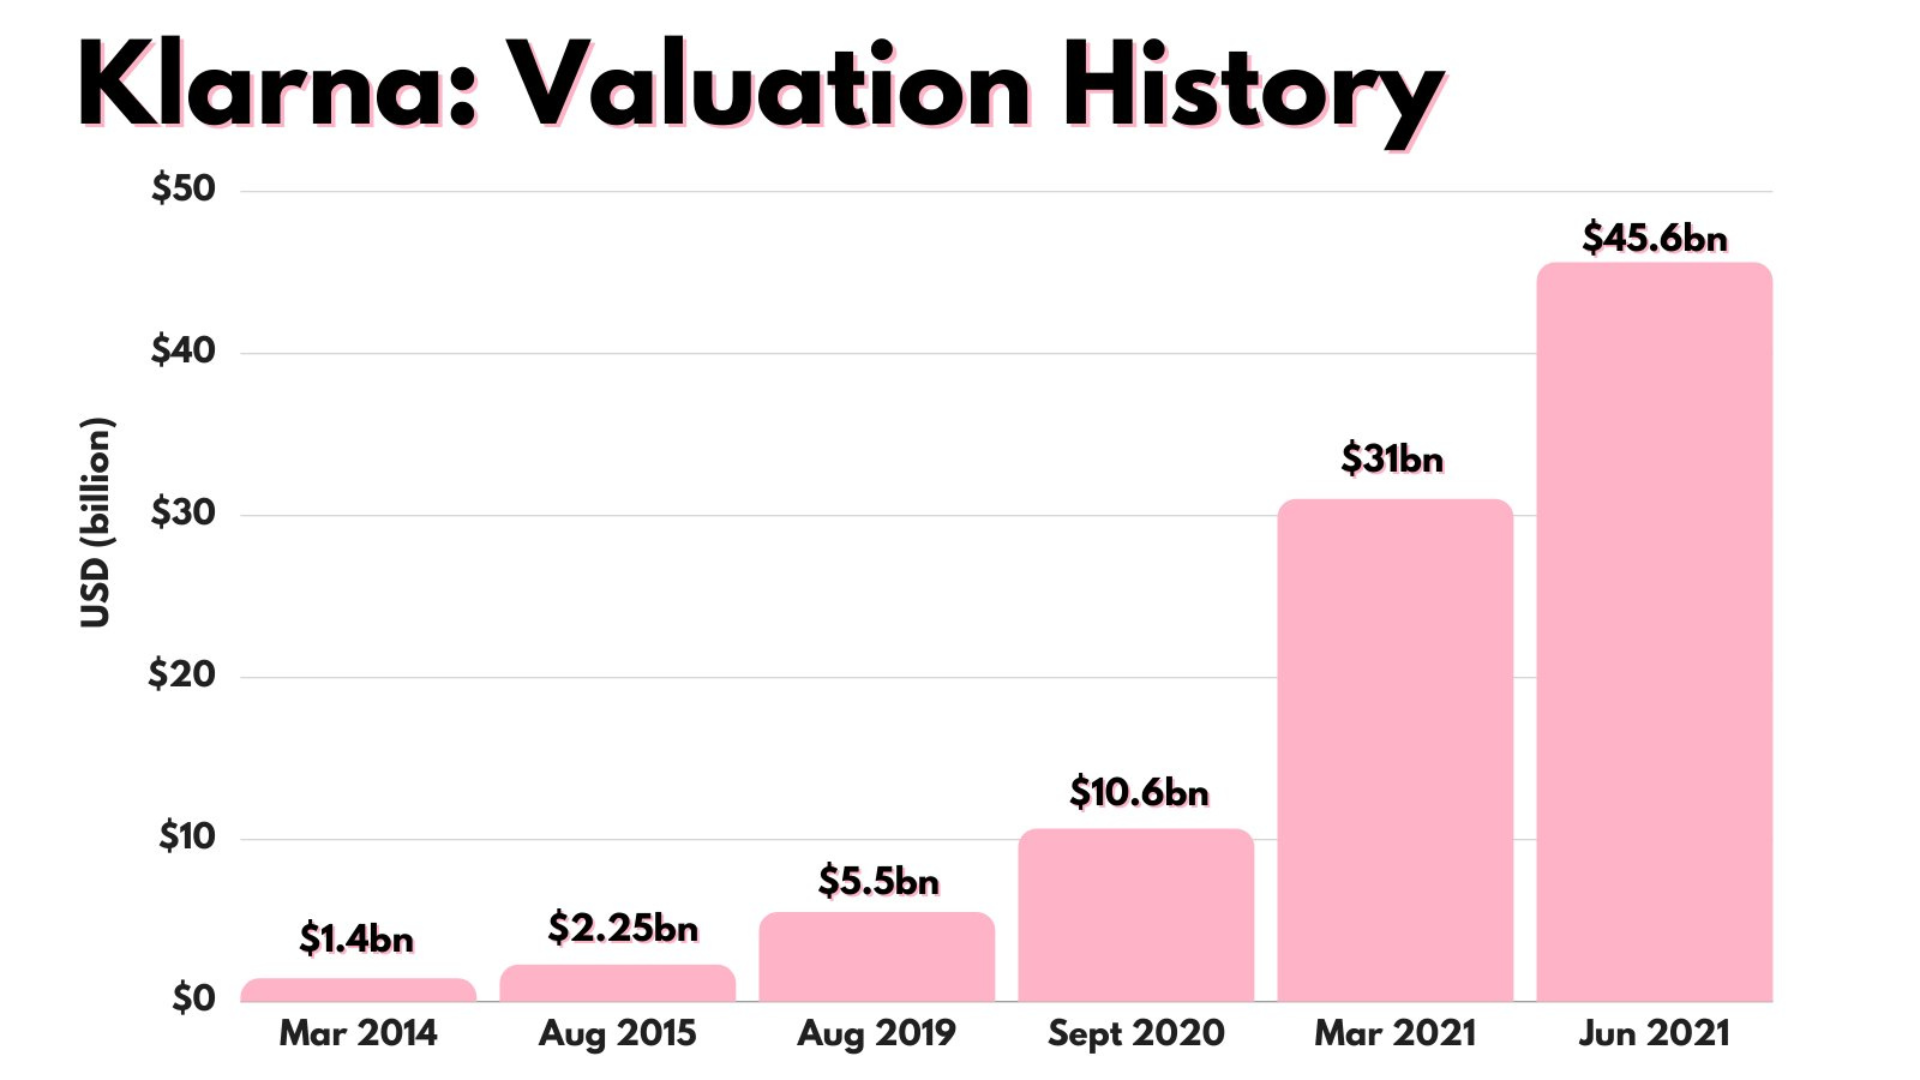 Klarna: Valuation History